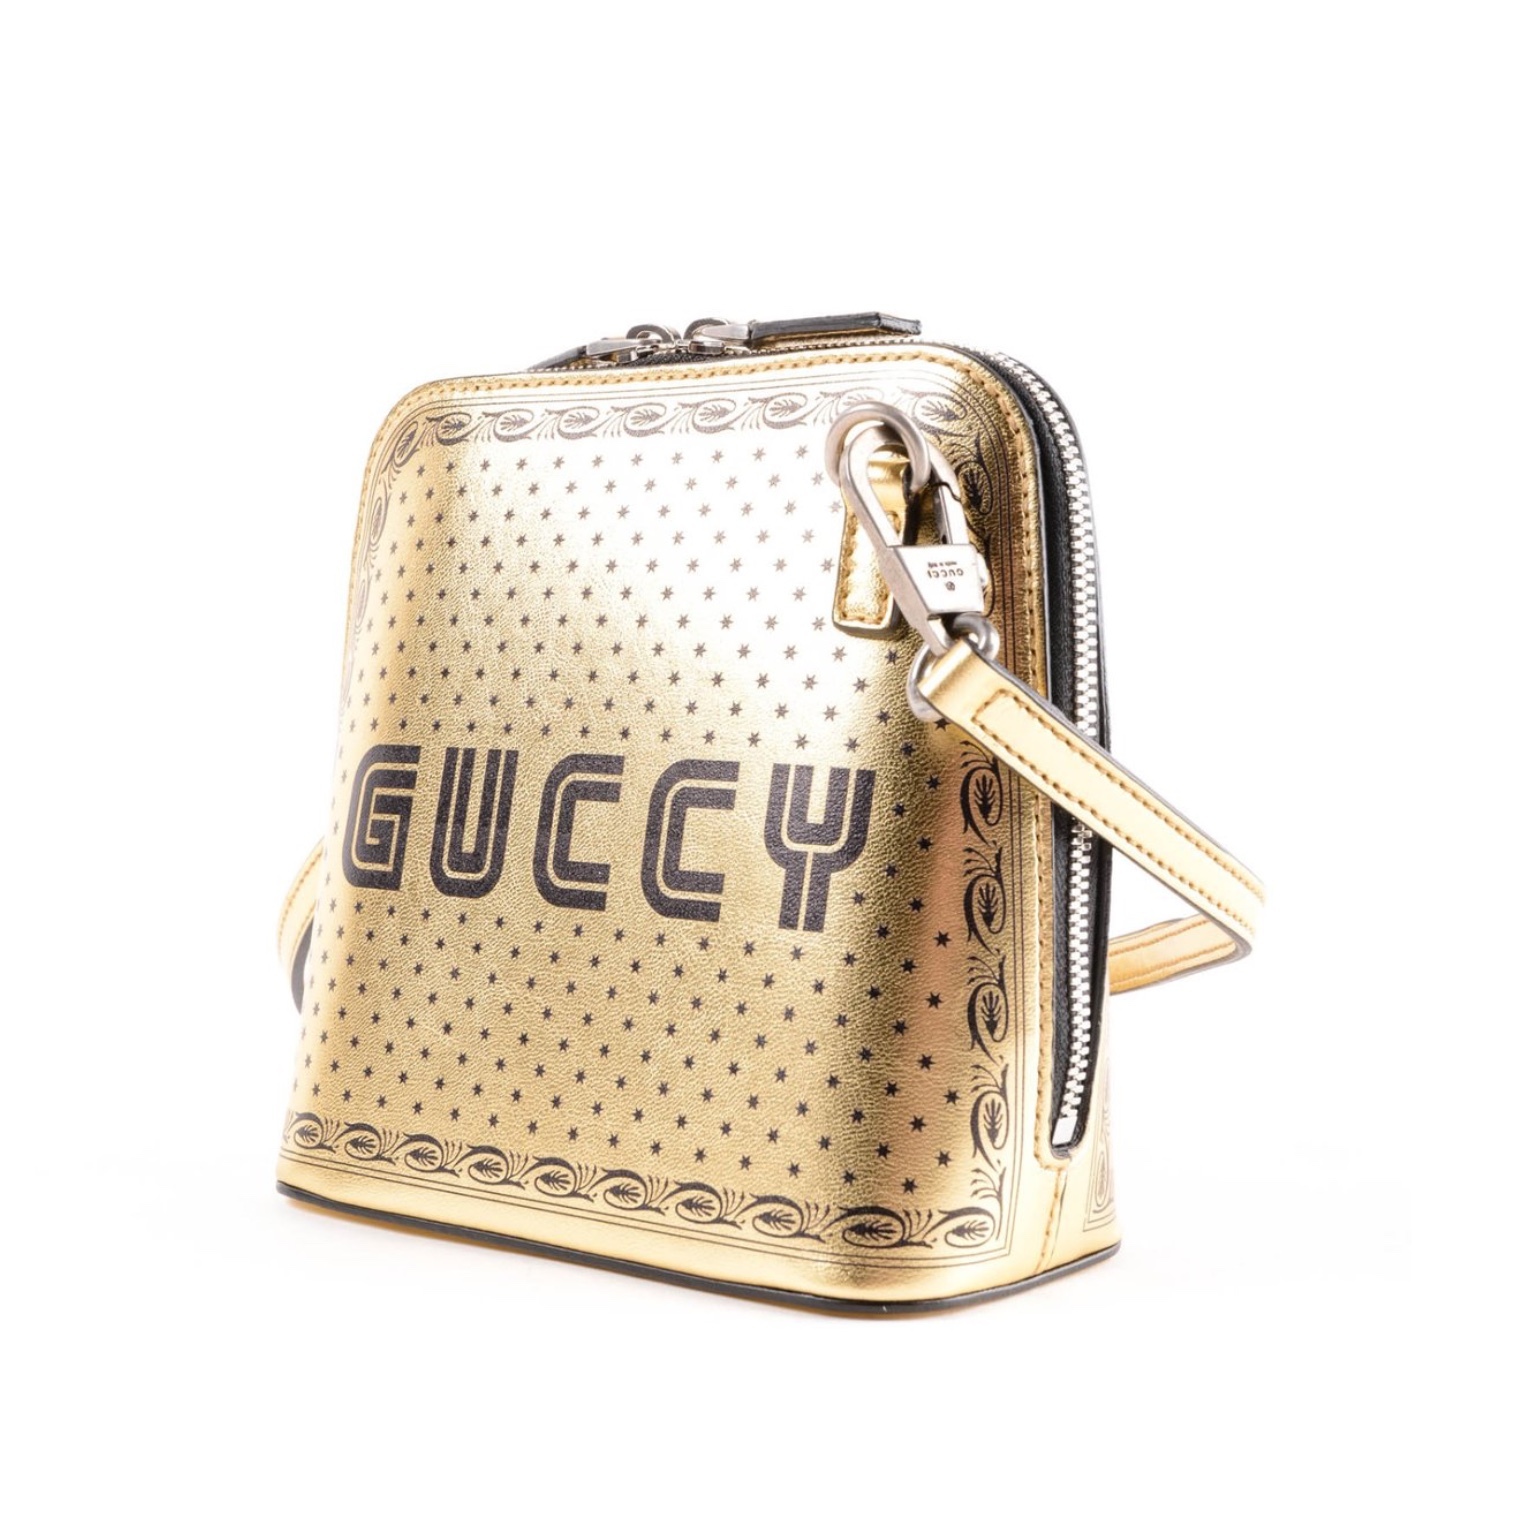 Gucci 2018 Crossbody GUCCY SEGA Print Spring Summer Collection Bag Gold - Handbags & Purses